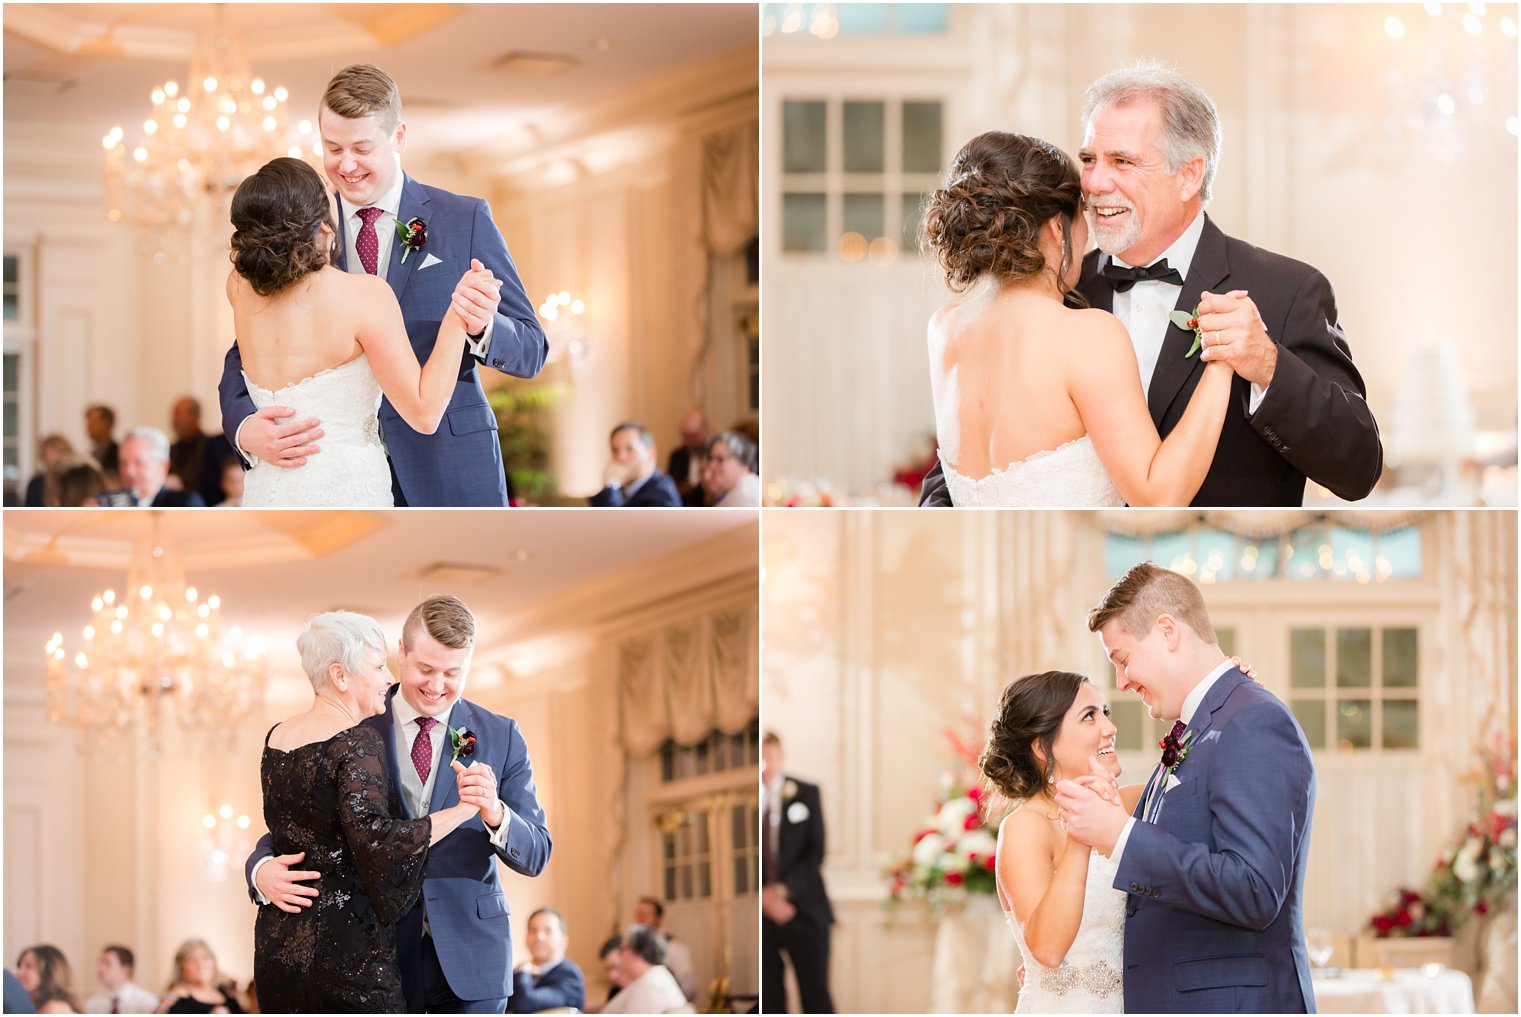 Wedding reception at Meadow Wood Manor | Photos by NJ Wedding Photographers Idalia Photography